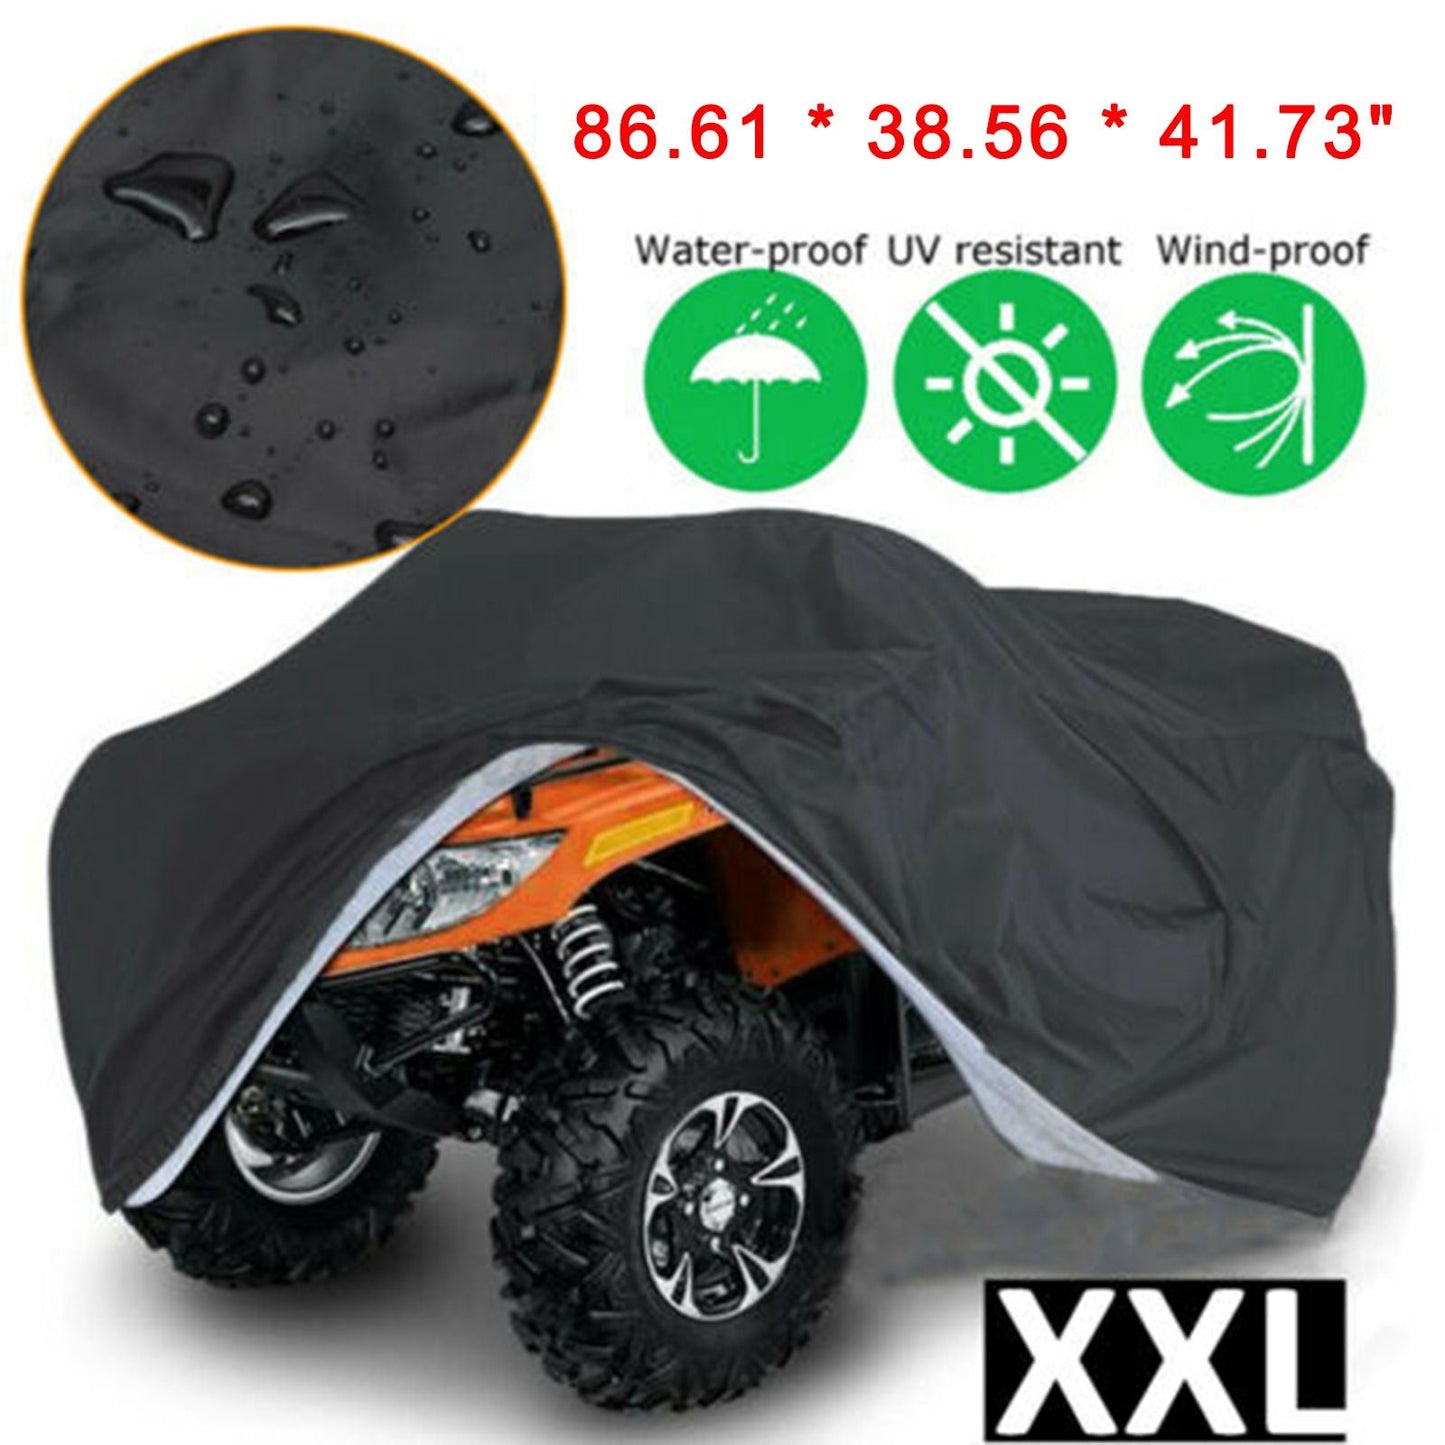 Waterproof ATV Cover XXL